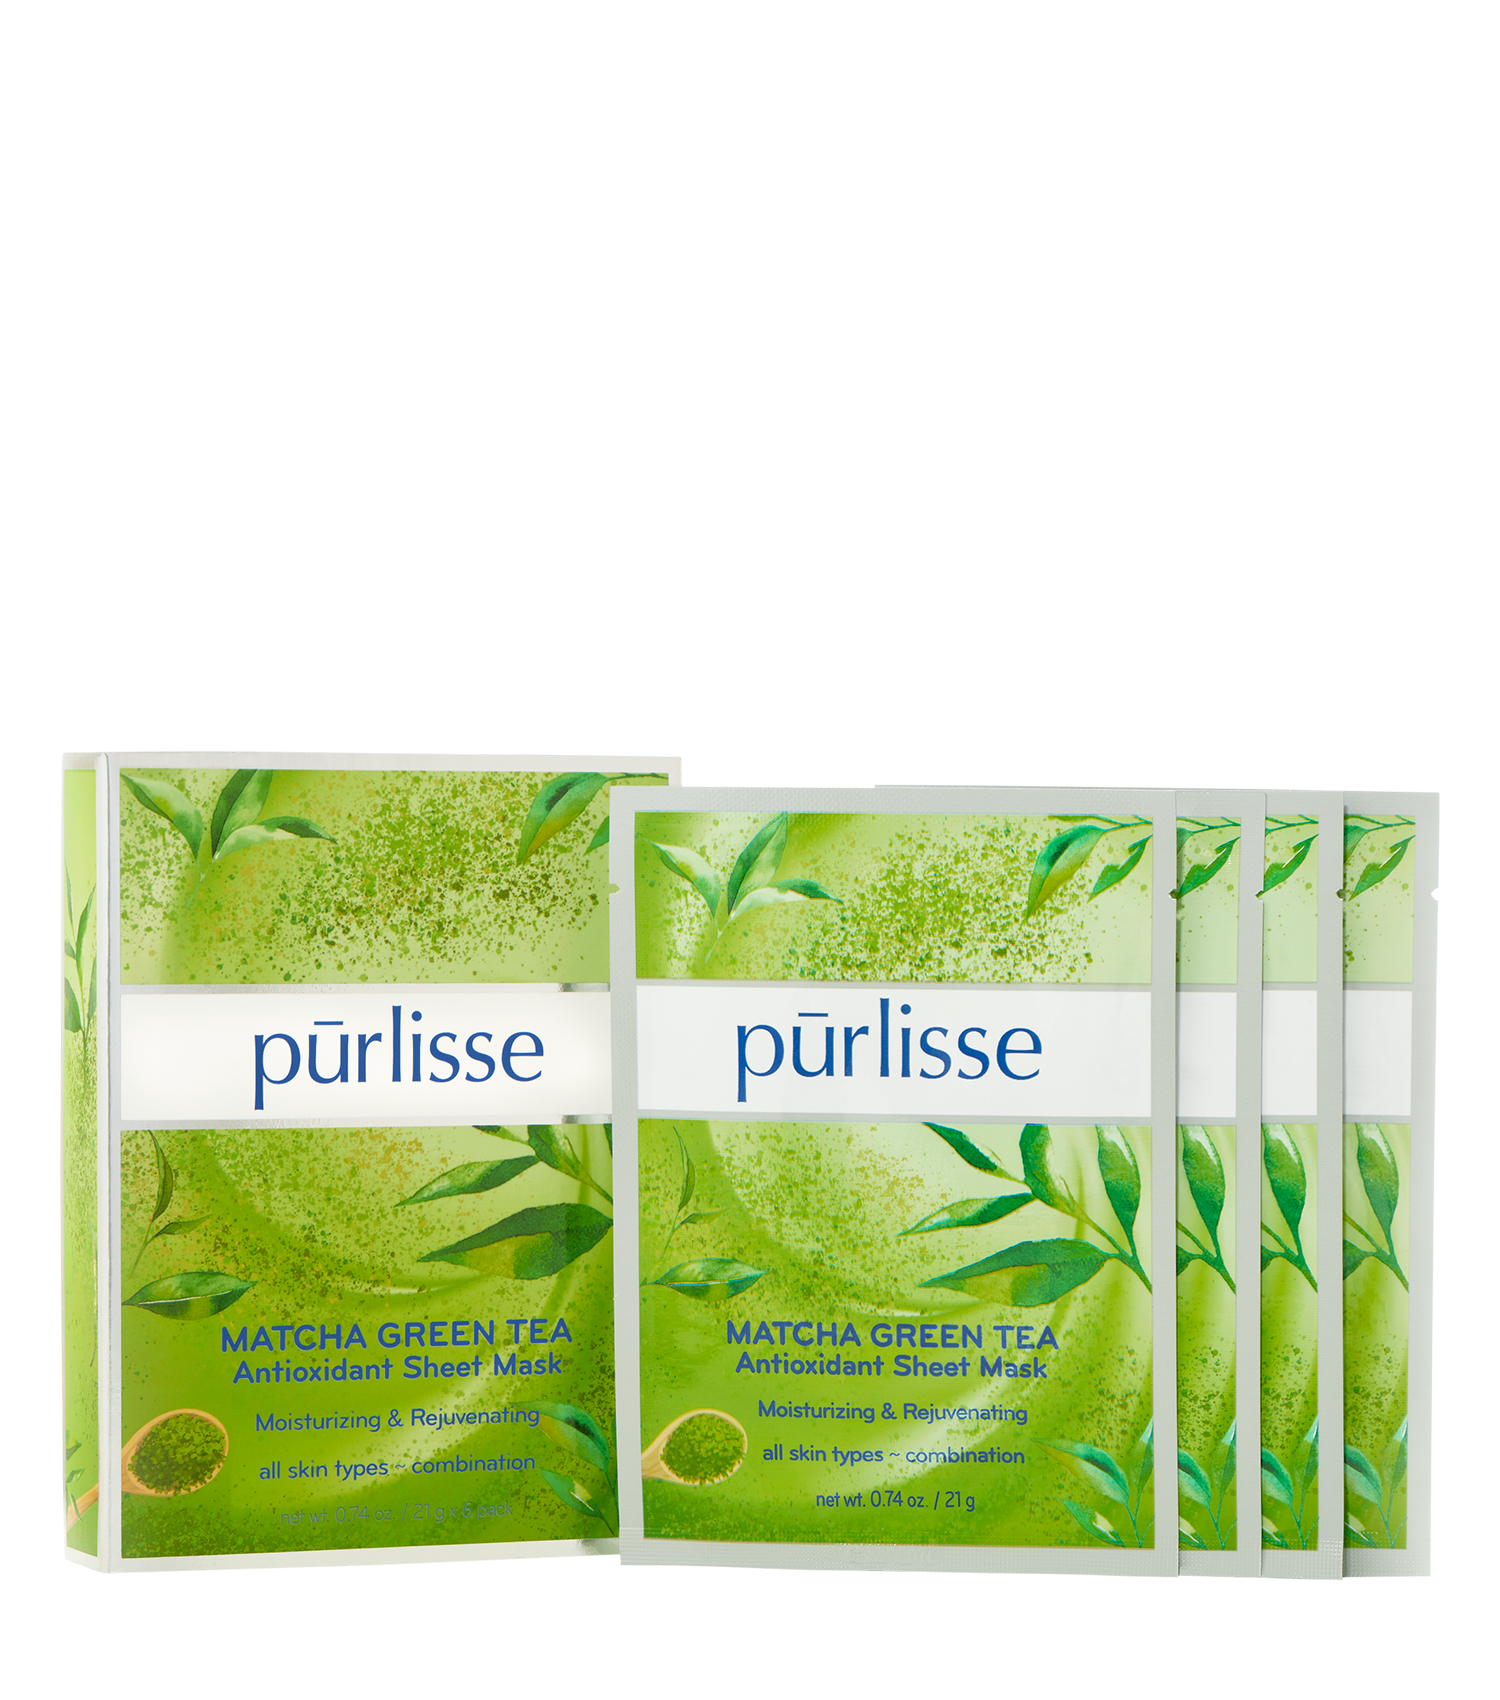 Pur-lisse MATCHA GREEN TEA Antioxidant Sheet Mask